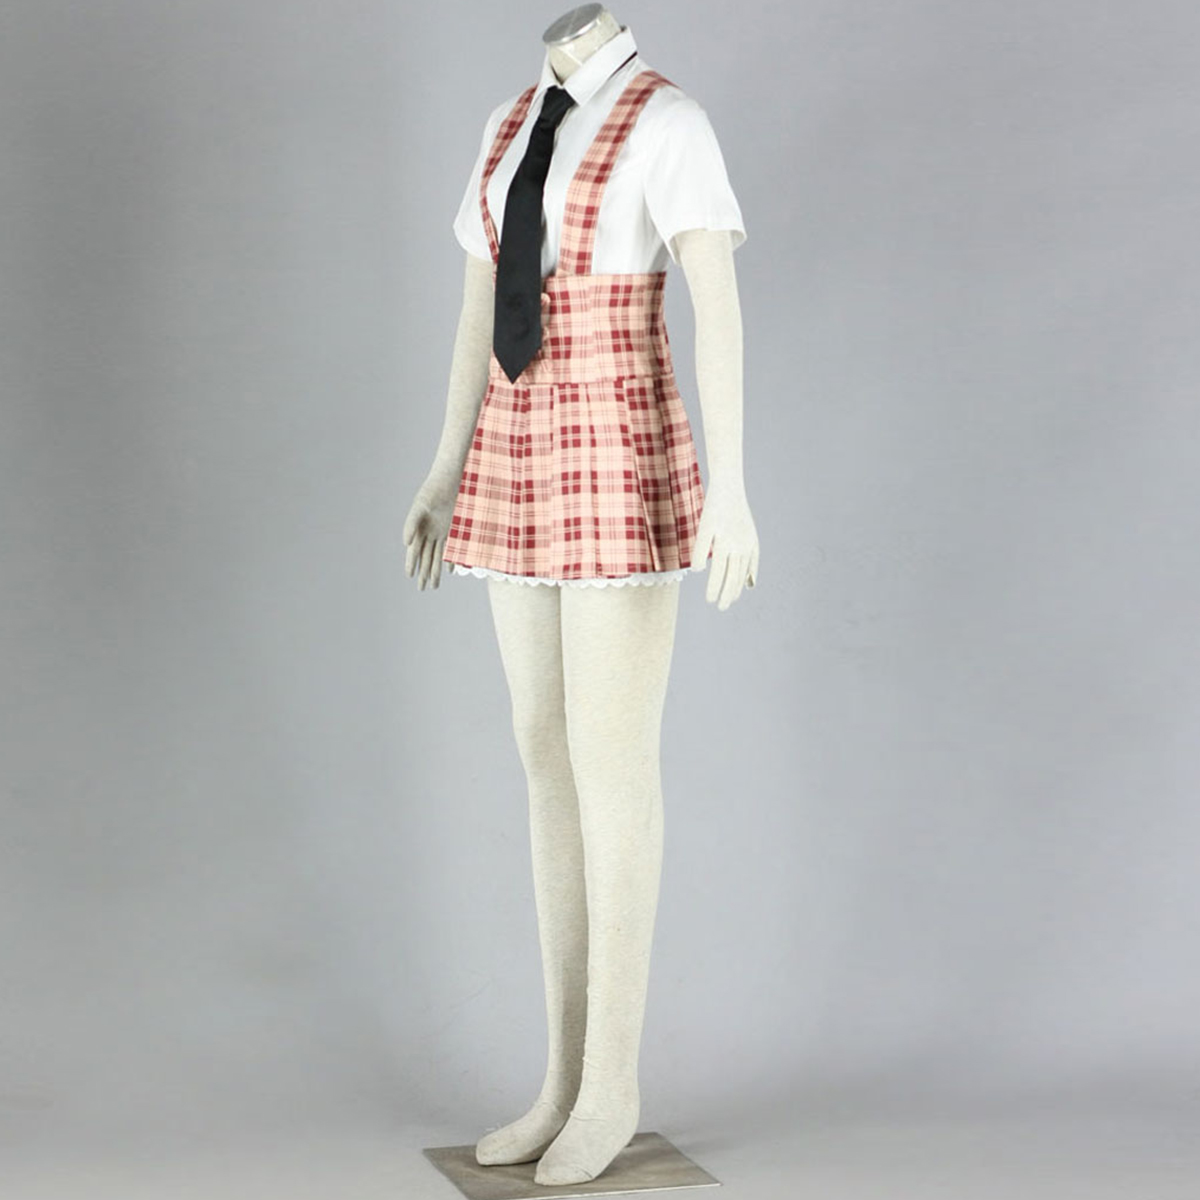 Axis Powers Hetalia Summer Female Uniform 2 Cosplay Costumes New Zealand Online Store